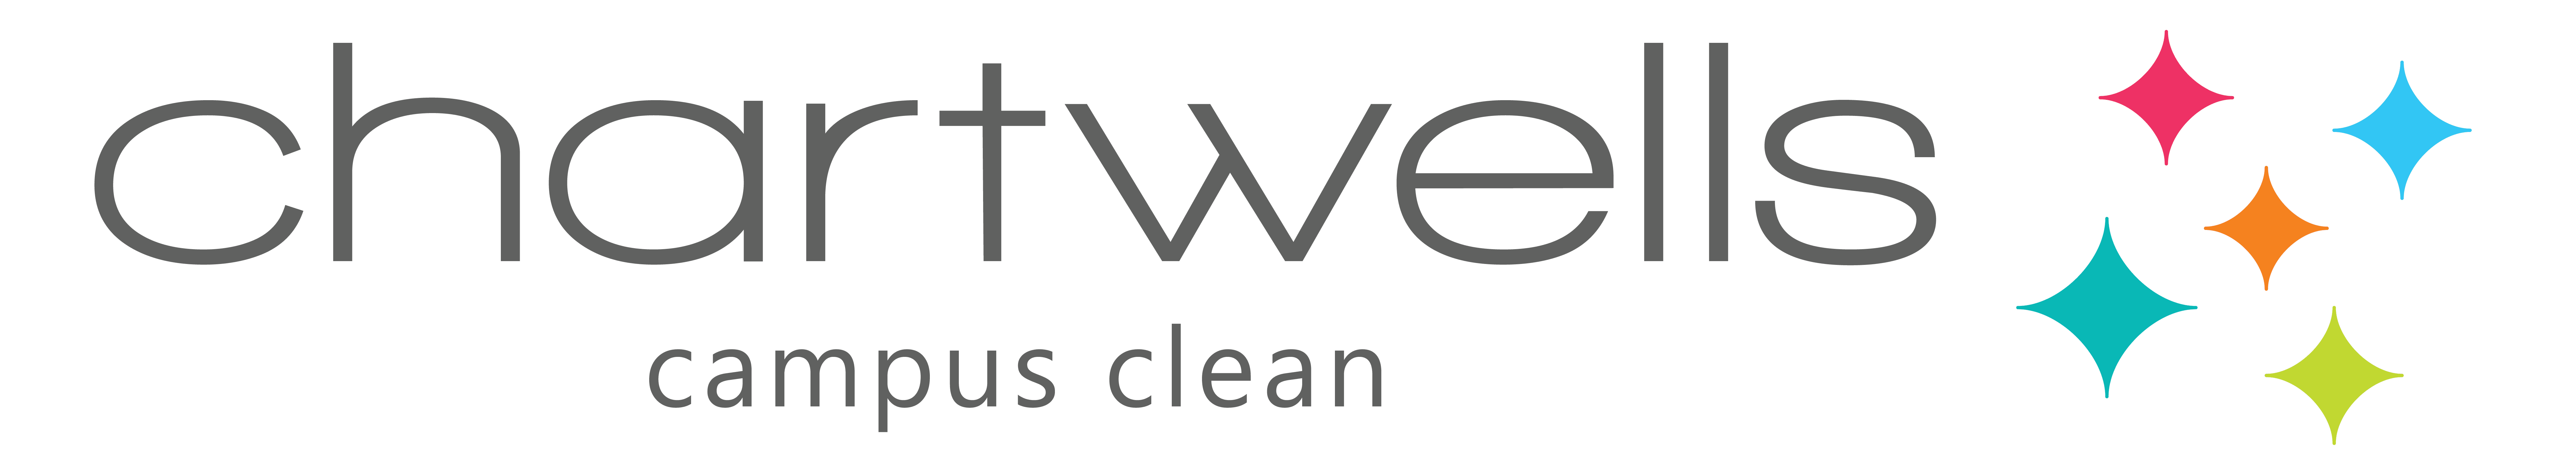 Chartwells Campus Clean logo